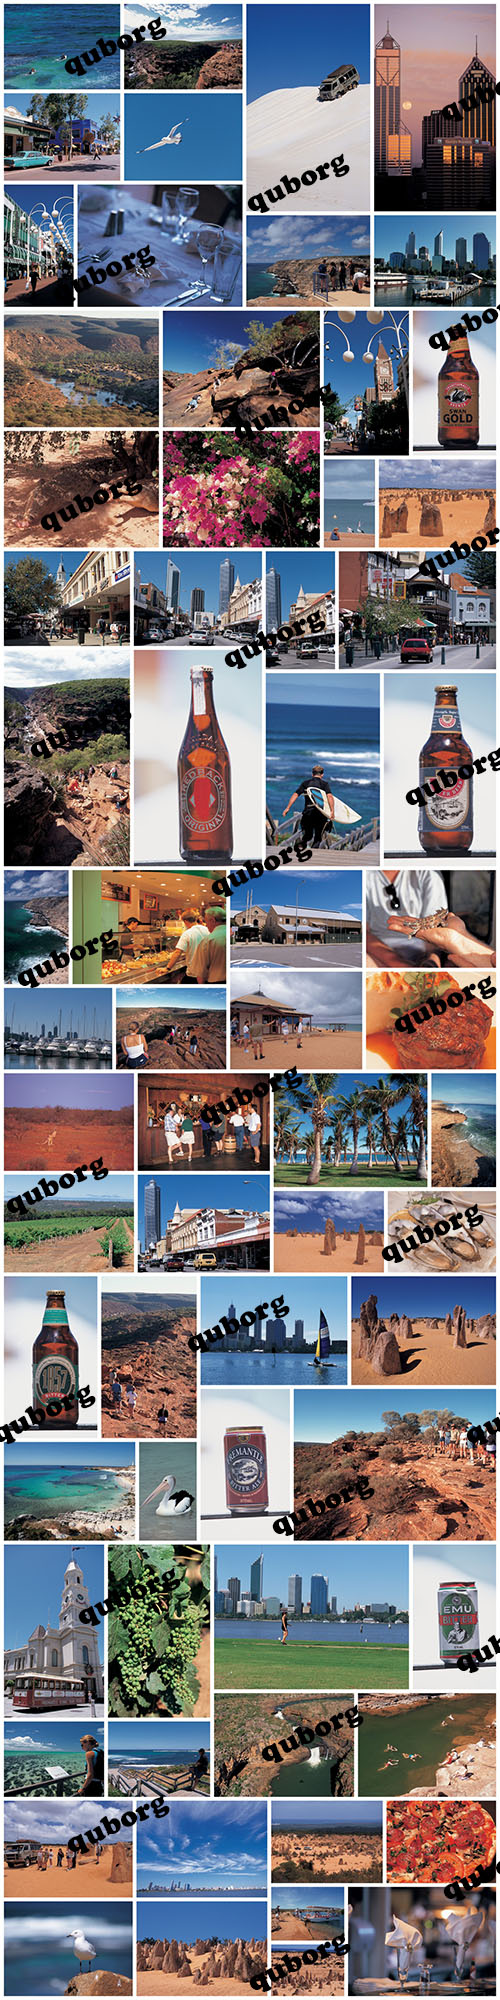 Stock Photos - West Australia